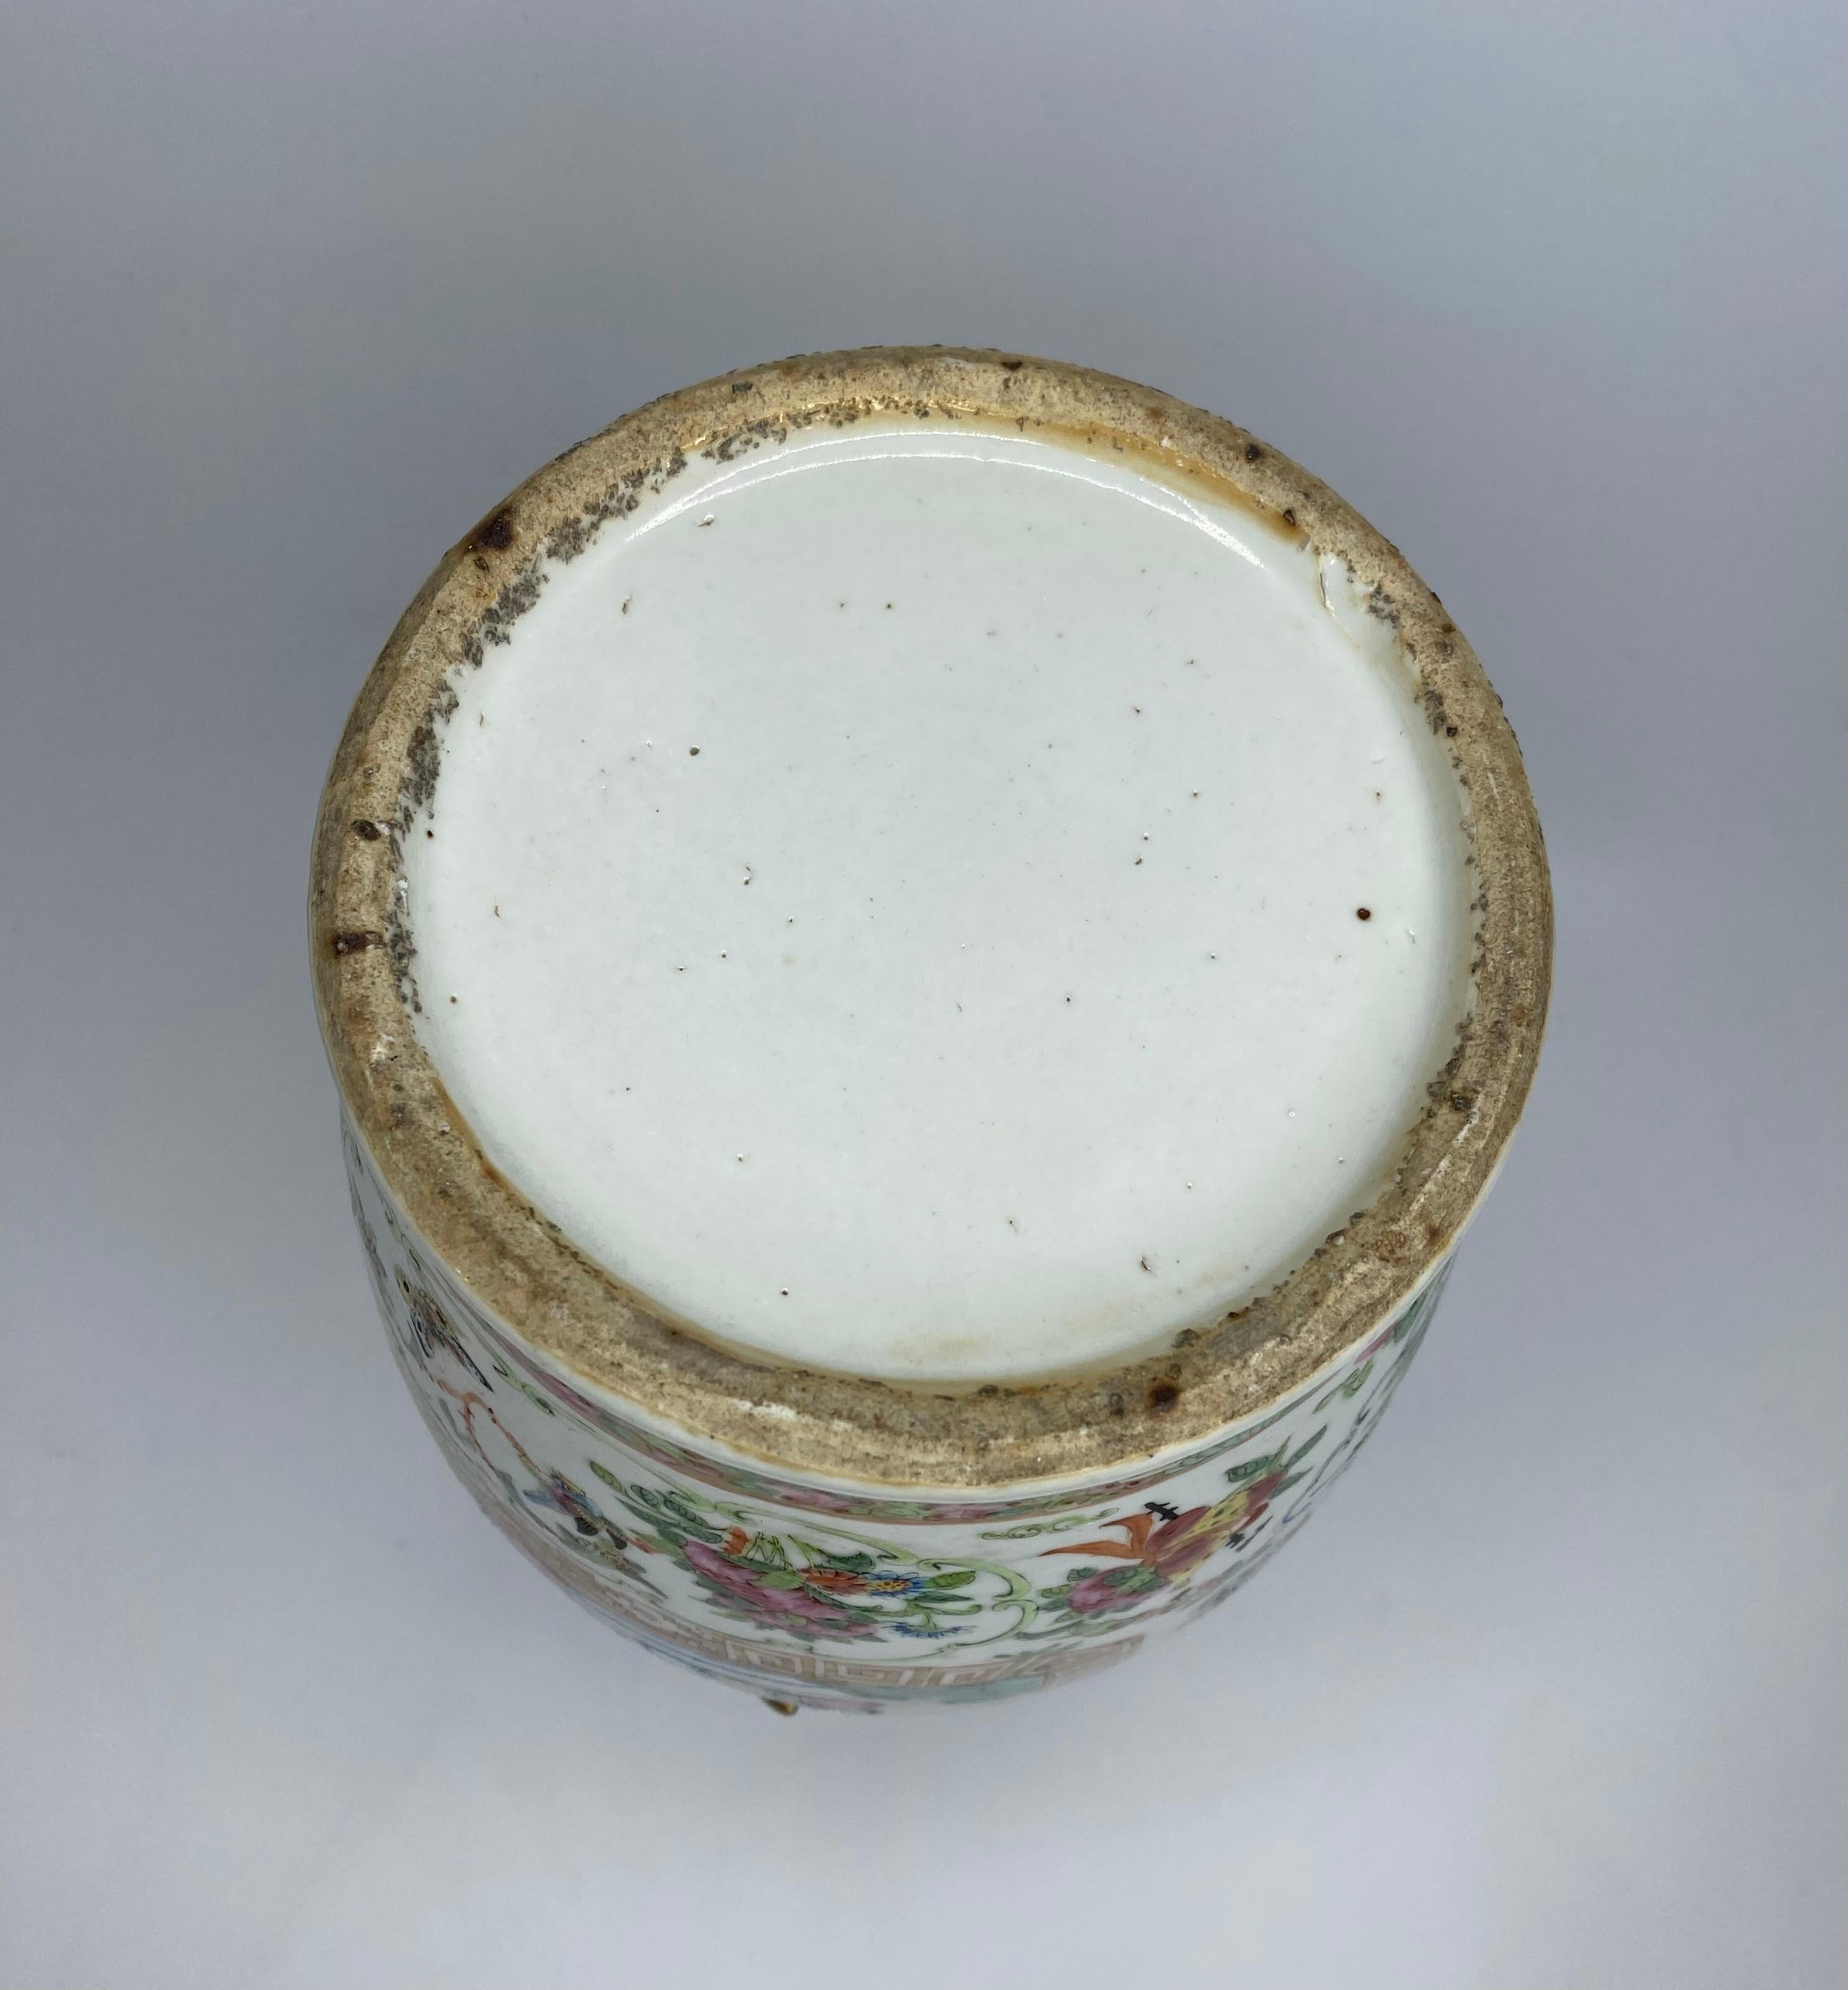 Chinese Cantonese porcelain vase, c. 1870. Qing Dynasty. 8